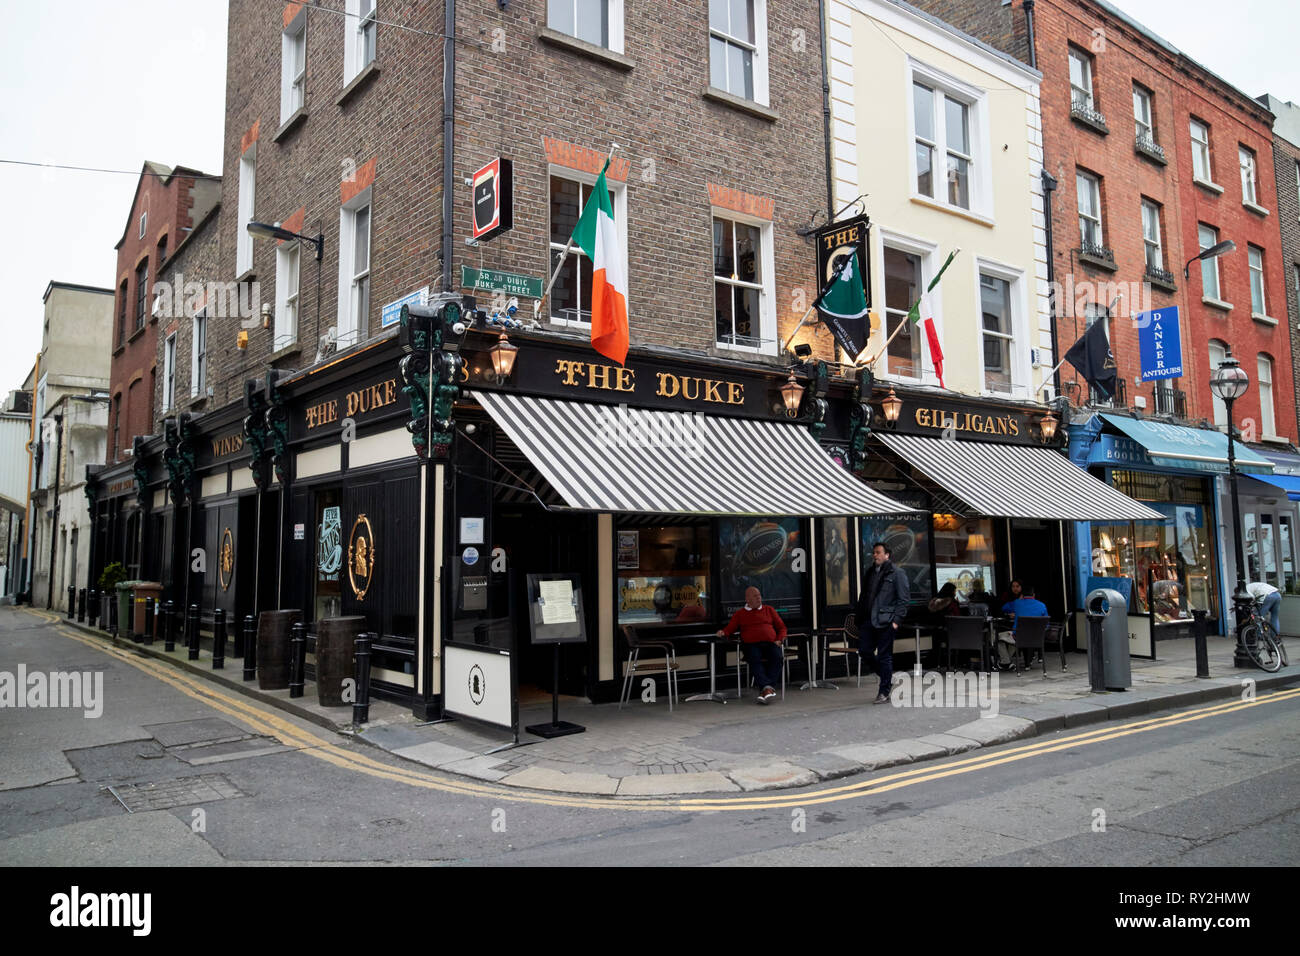 The Duke and Gilligans pub start of the dublin literary trail Dublin Republic of Ireland Europe Stock Photo